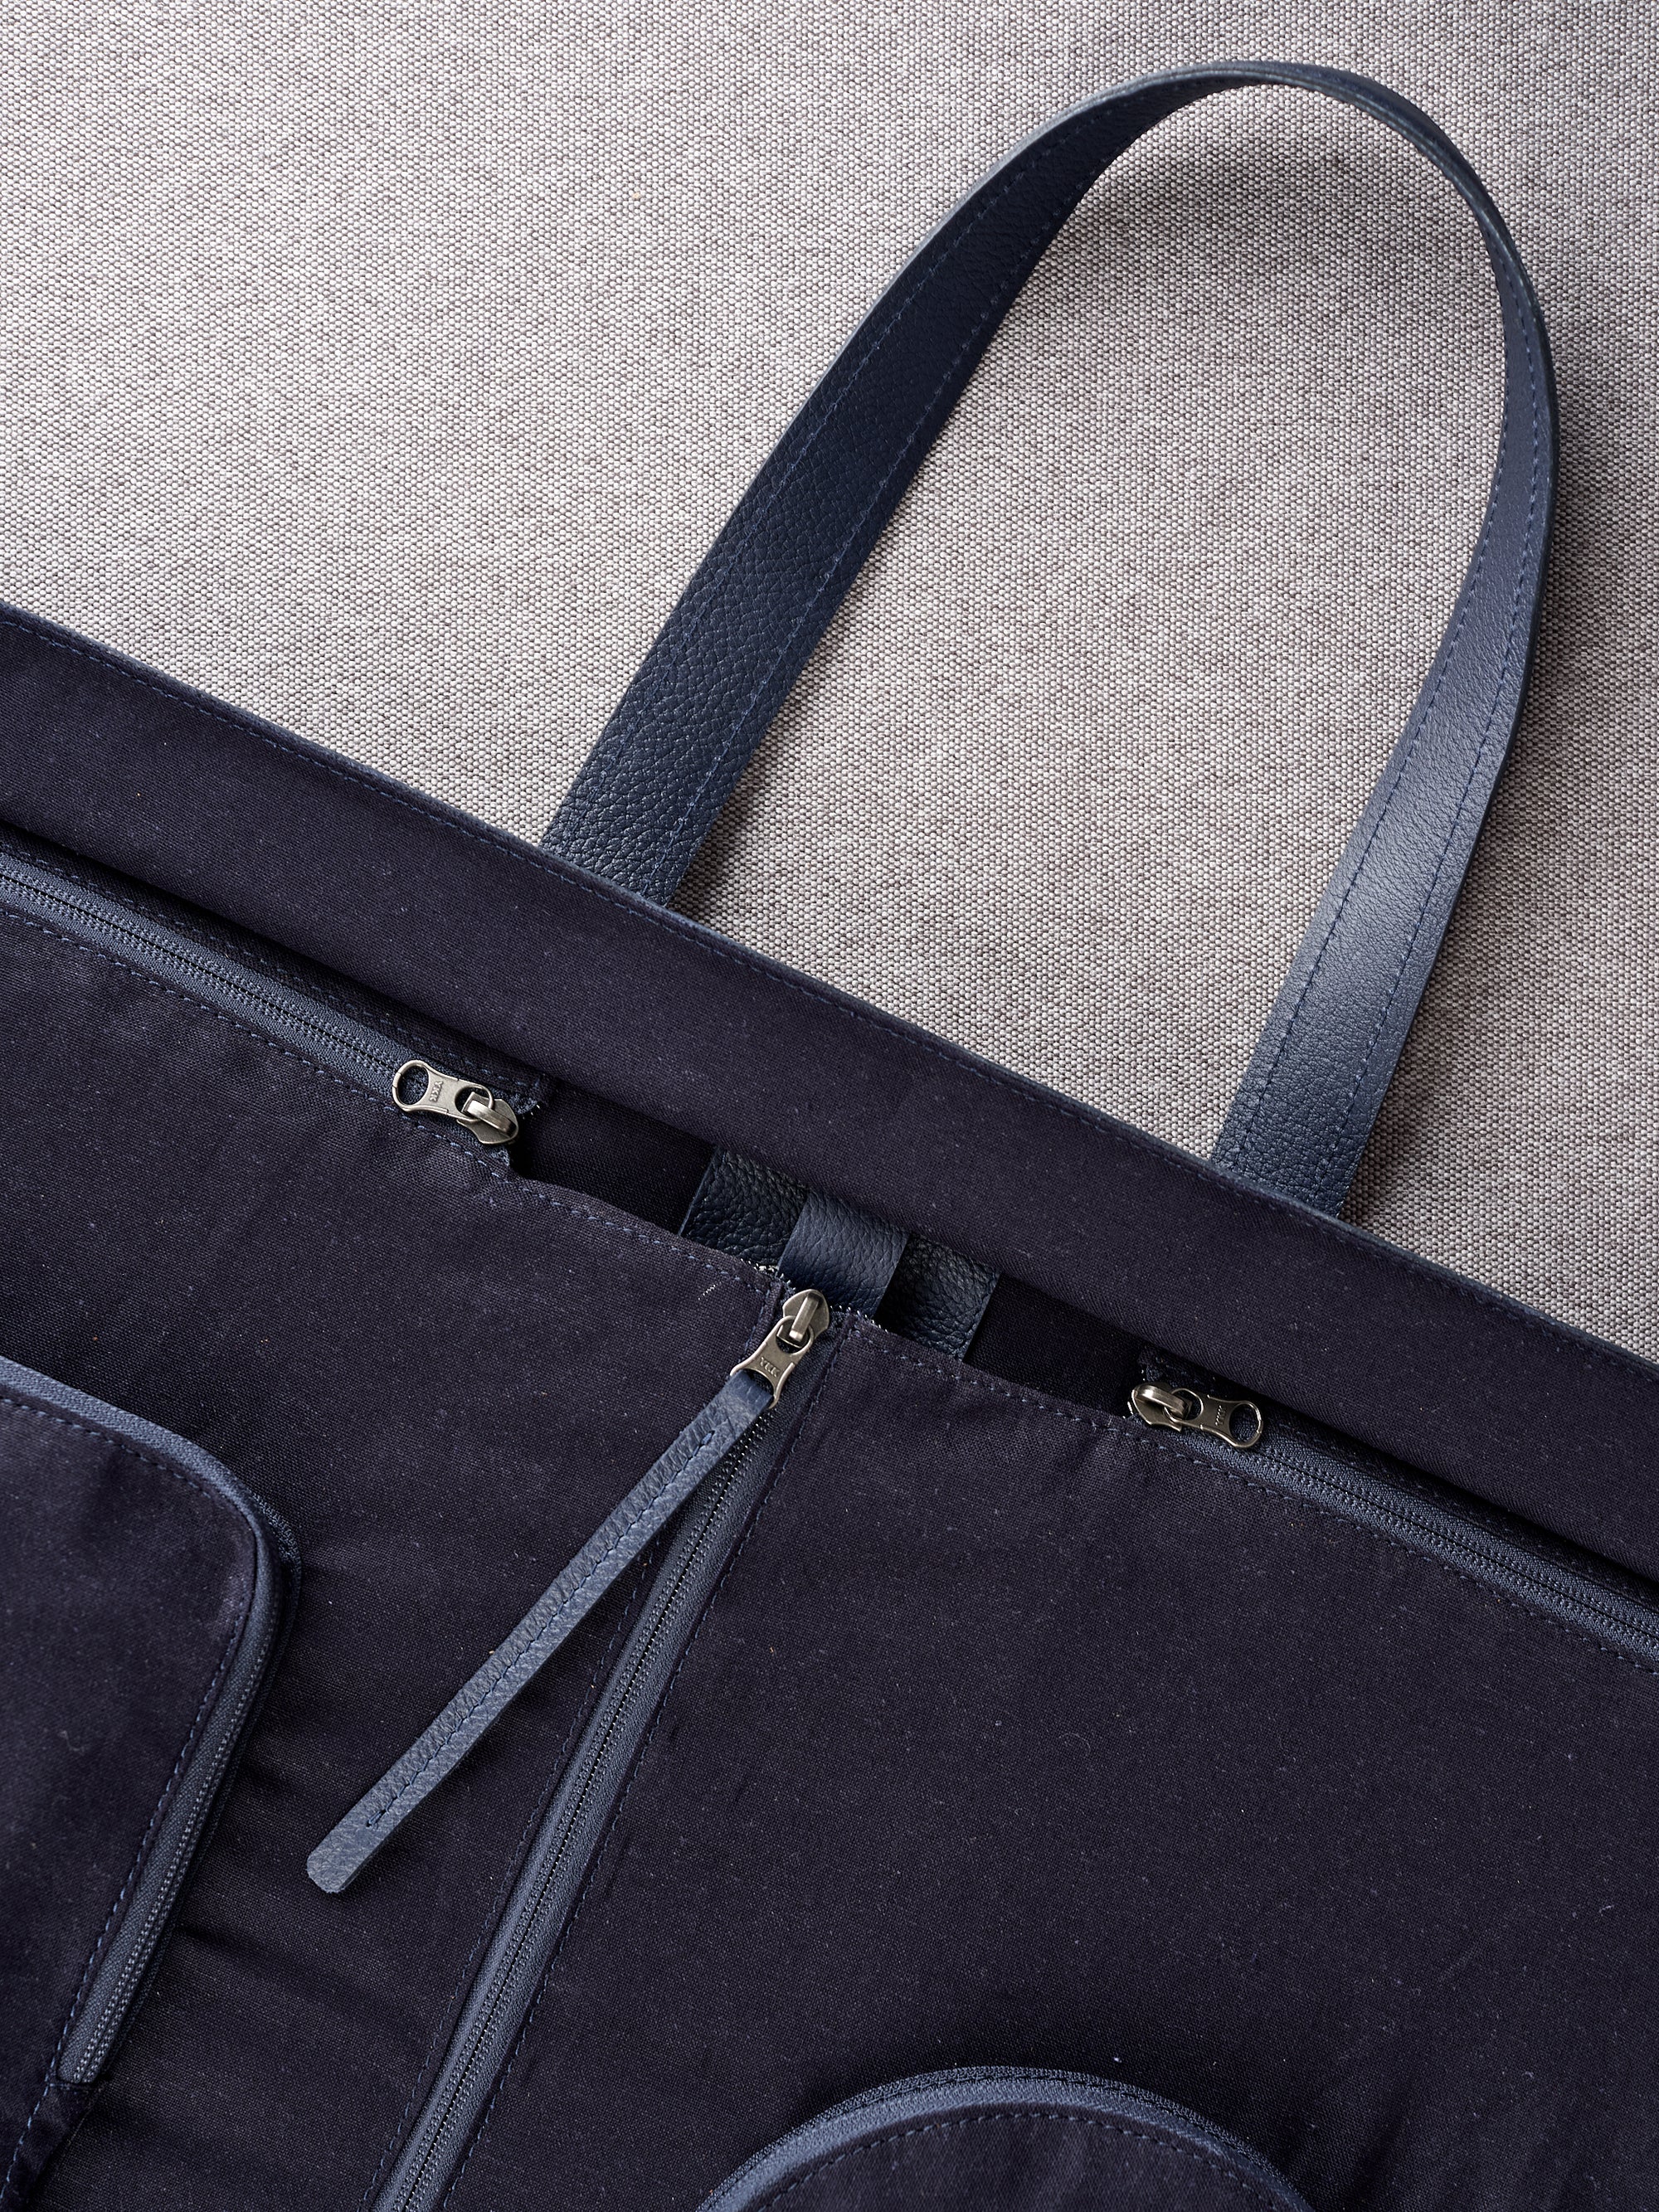 Suit Garment Bag Navy by Capra Leather